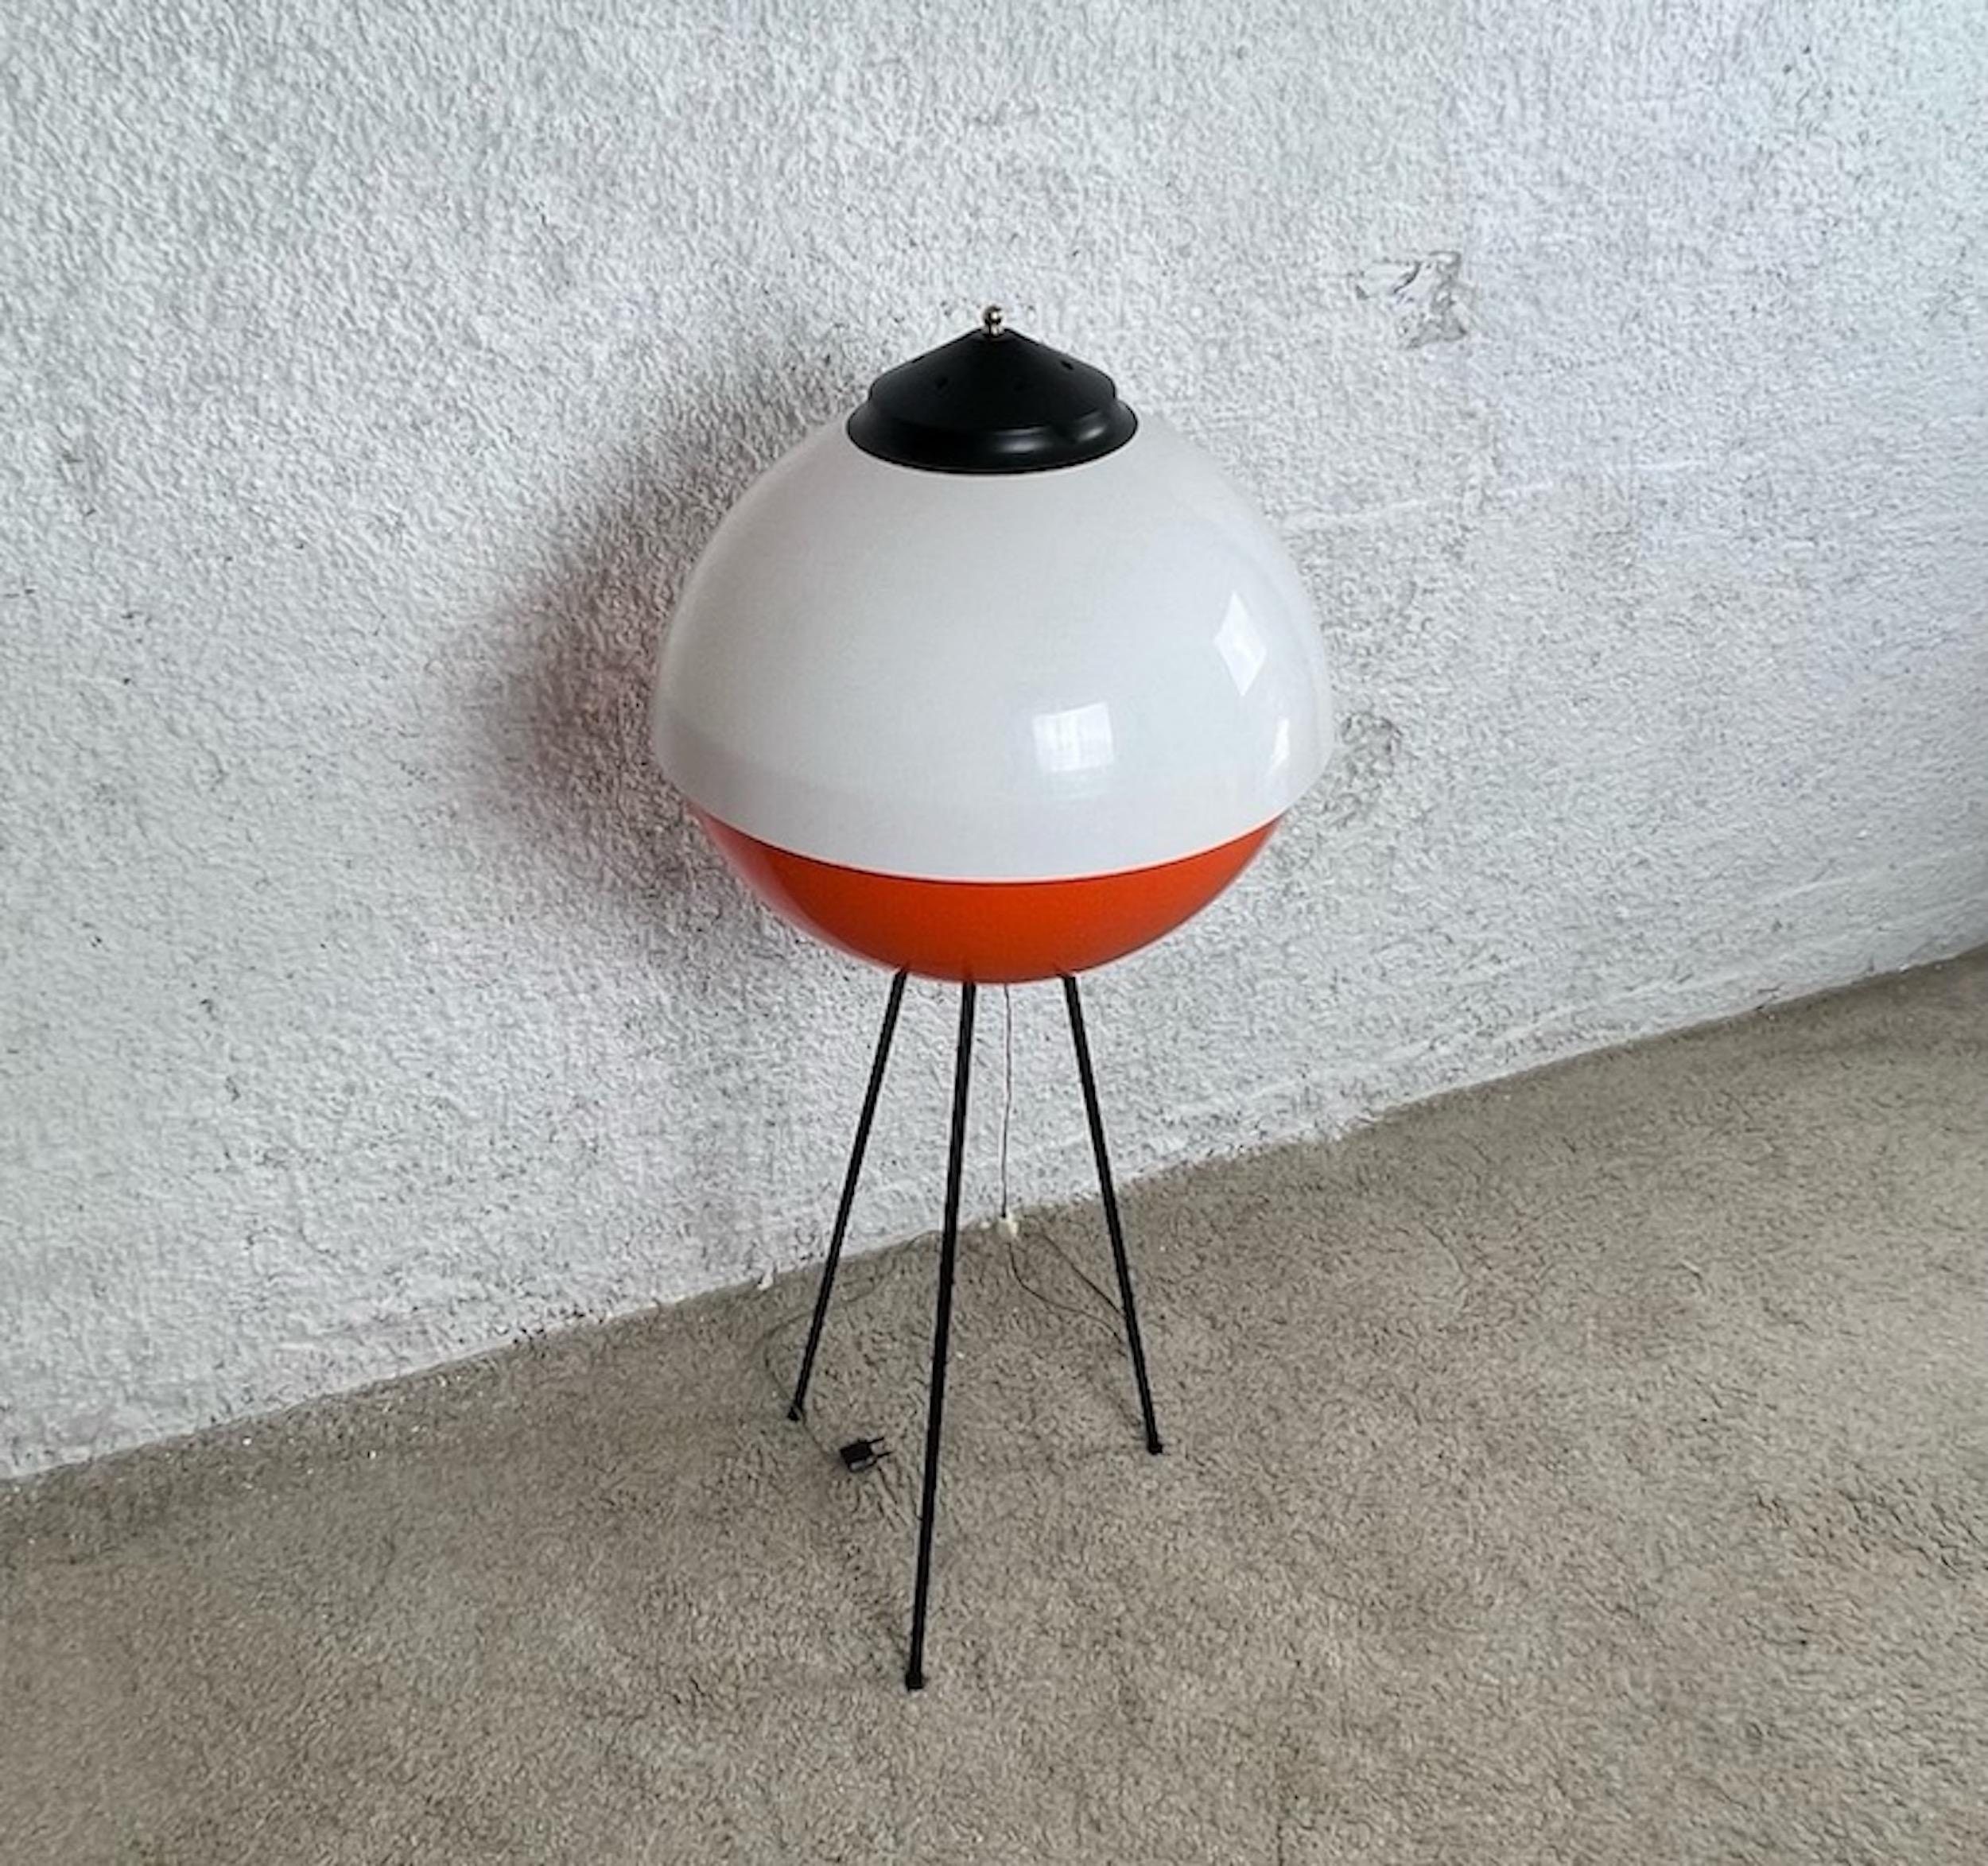 Large Space Age Tripod Floor Lamp, 60s - Italian UFO Lamp Stilnovo Style For Sale 4